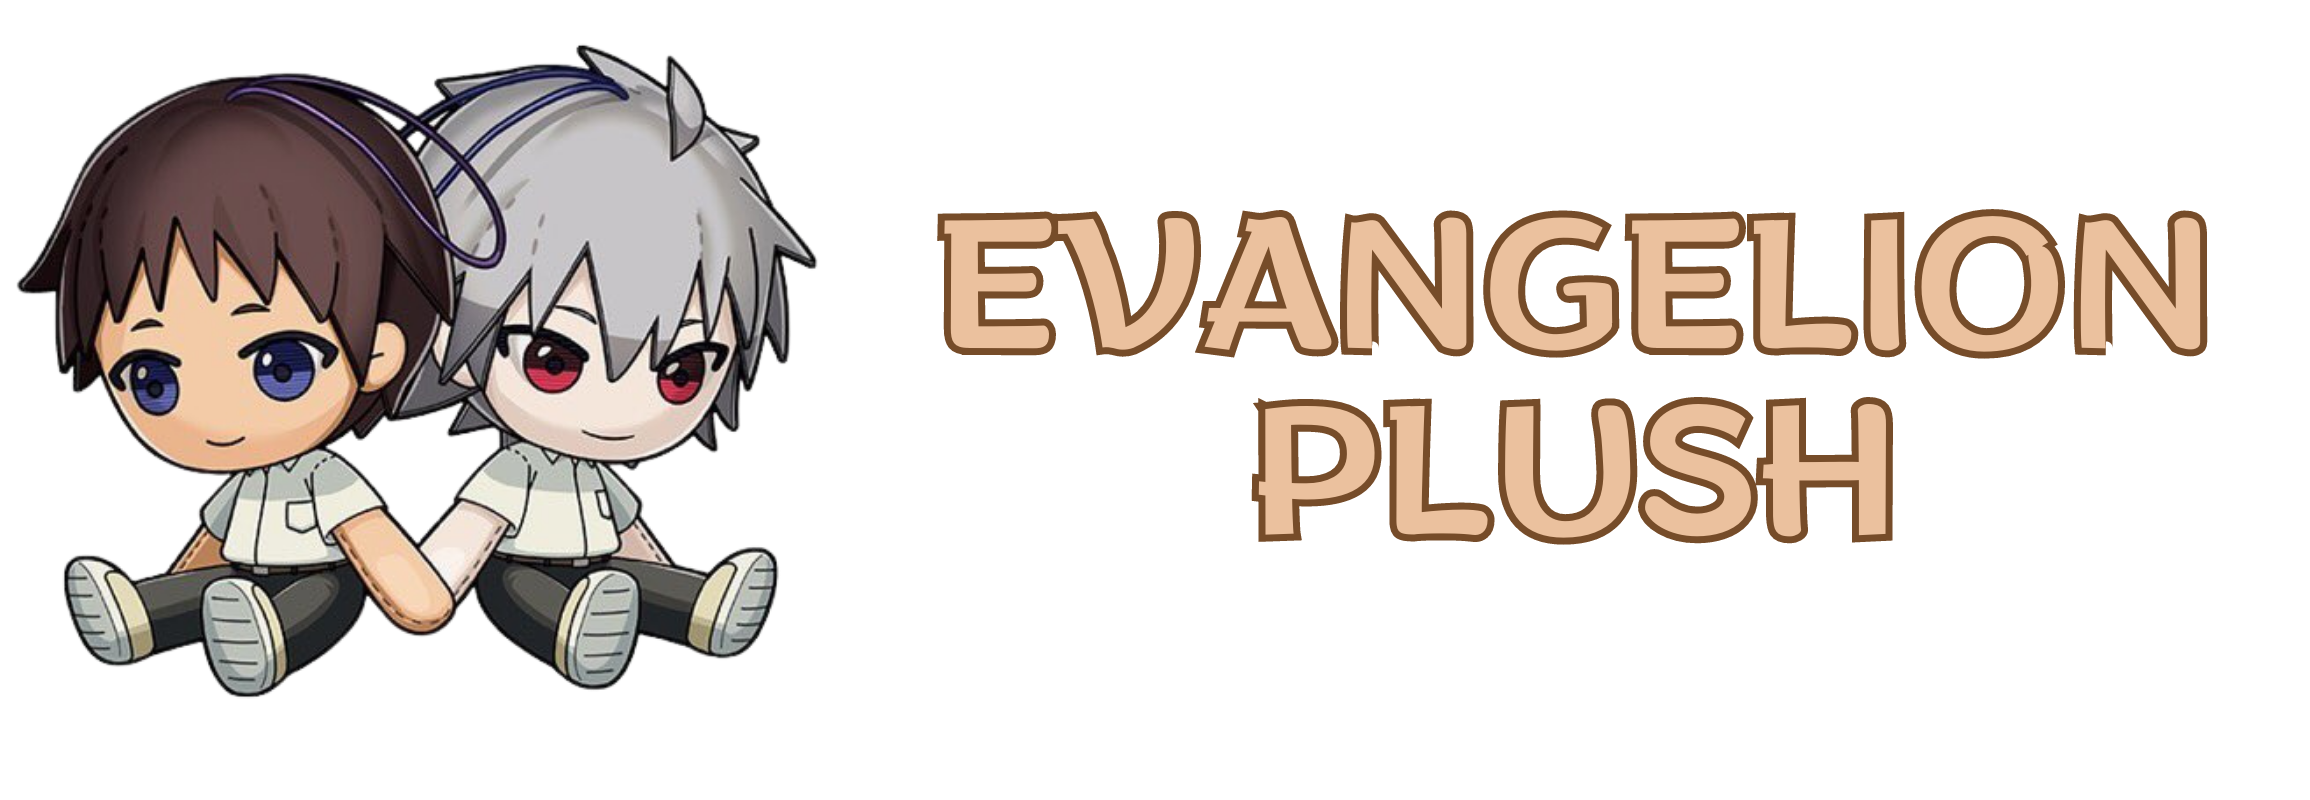 Evangelion Plush logo1 - Evangelion Plush